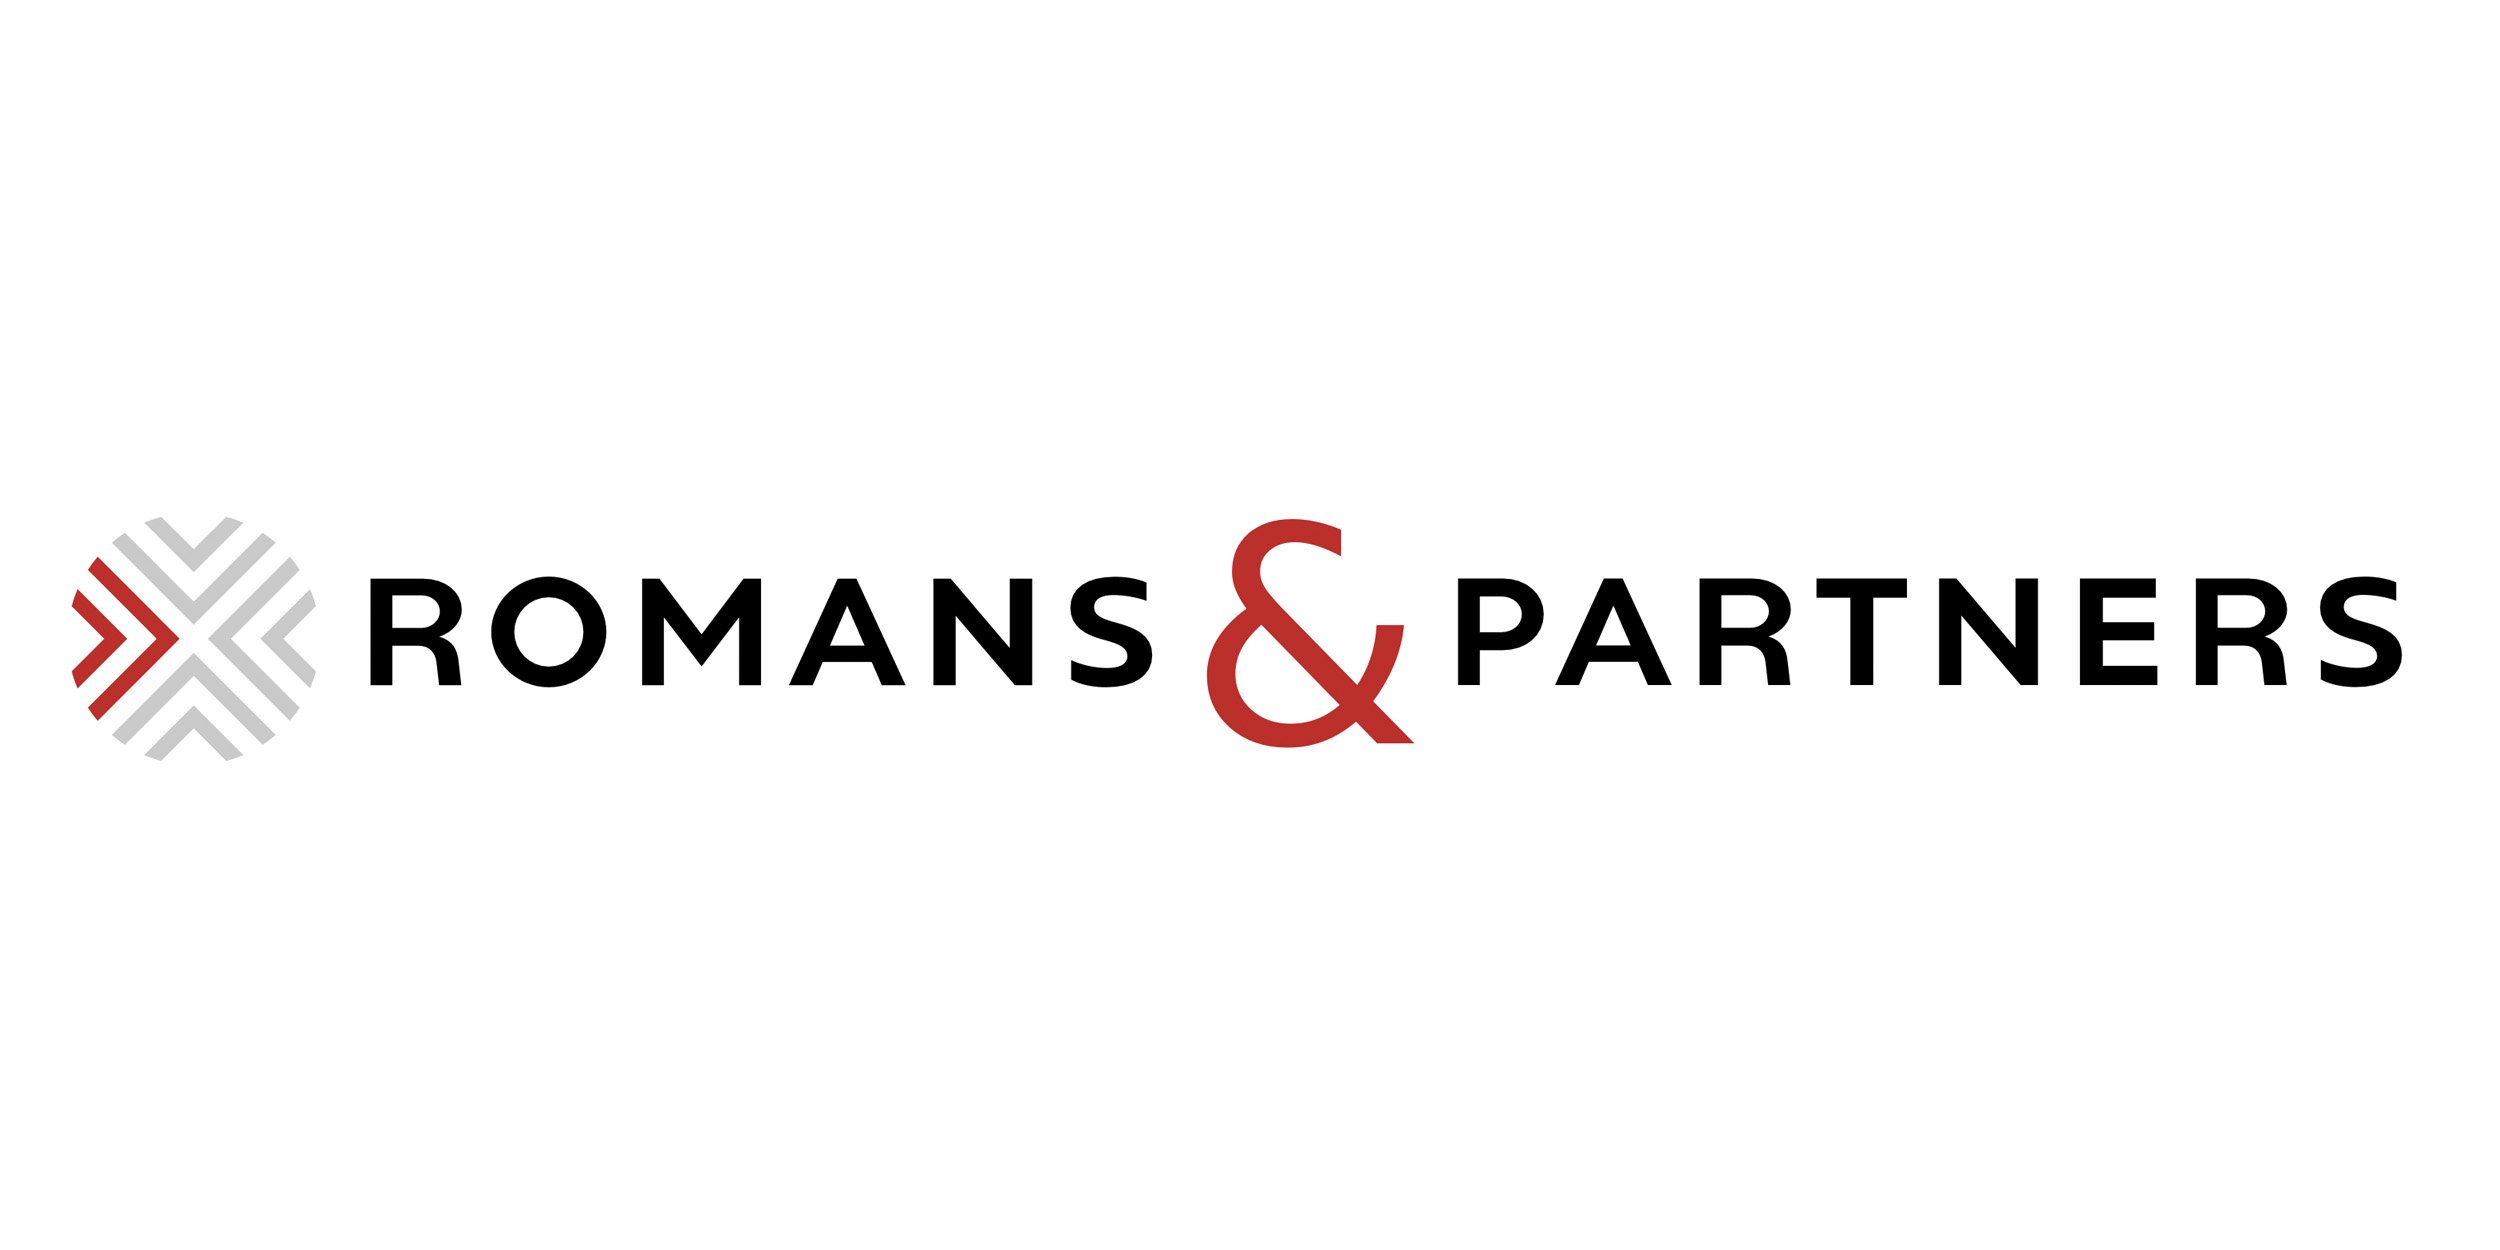 Romans & Partners.jpg